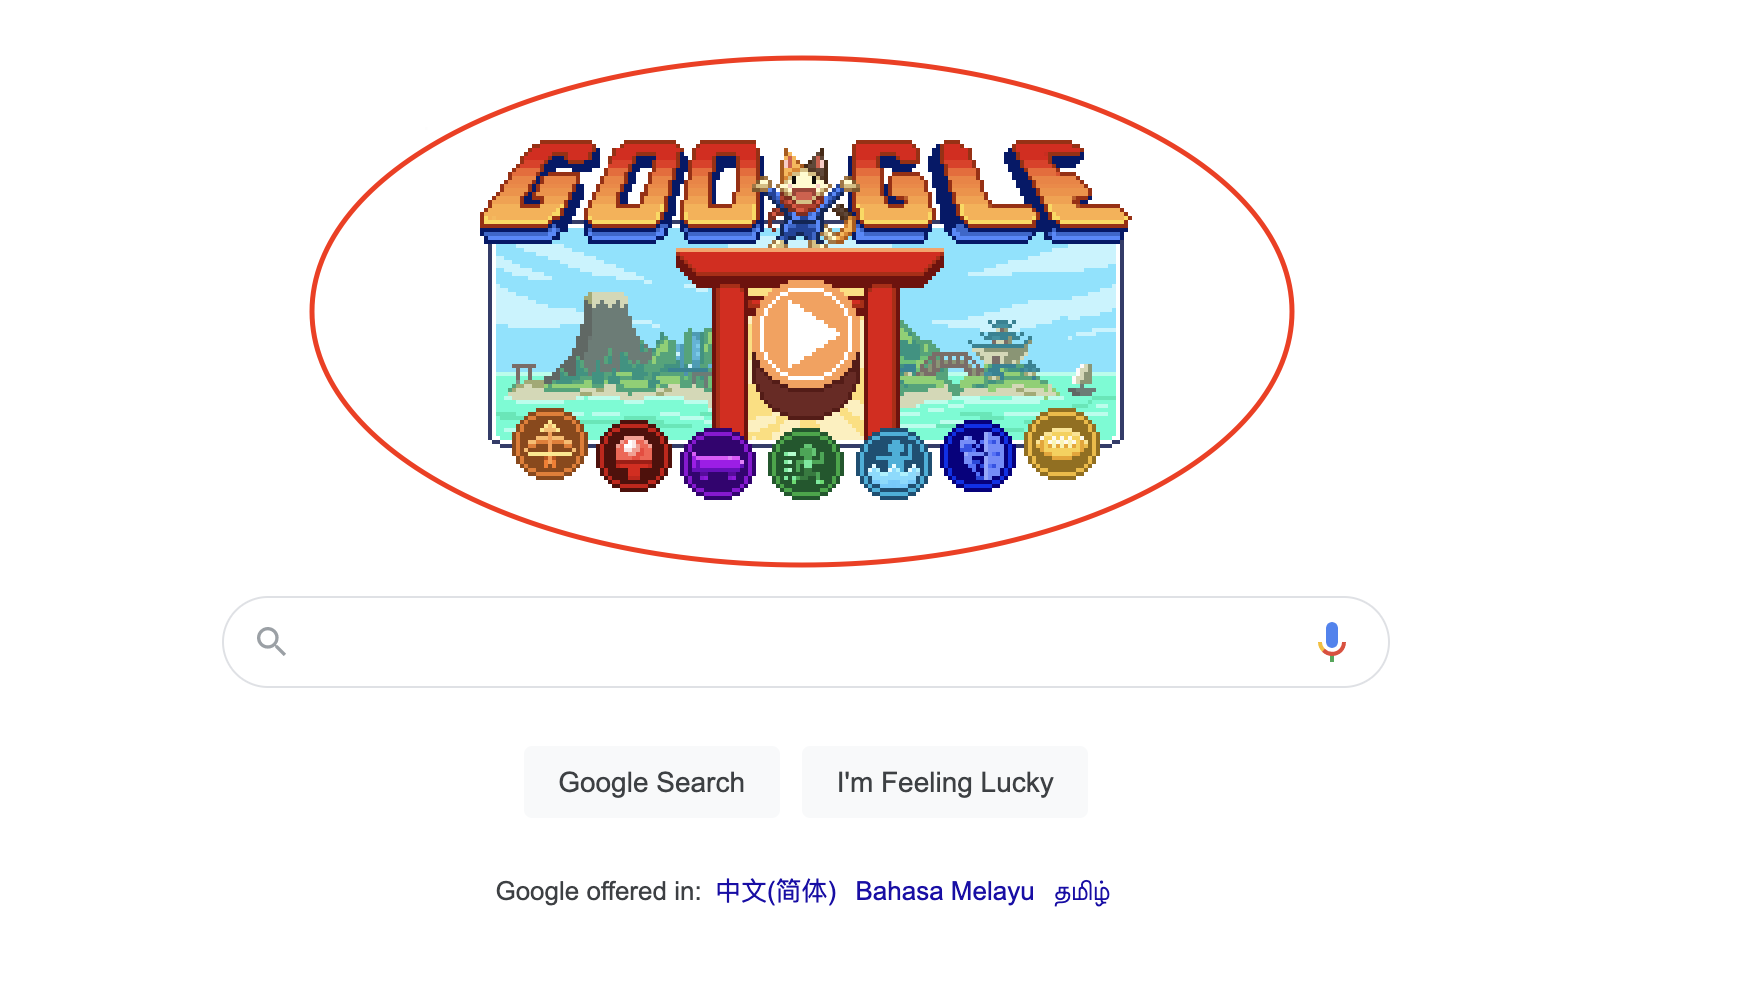 Google Doodle celebrates Tokyo Olympics with the Champion Island